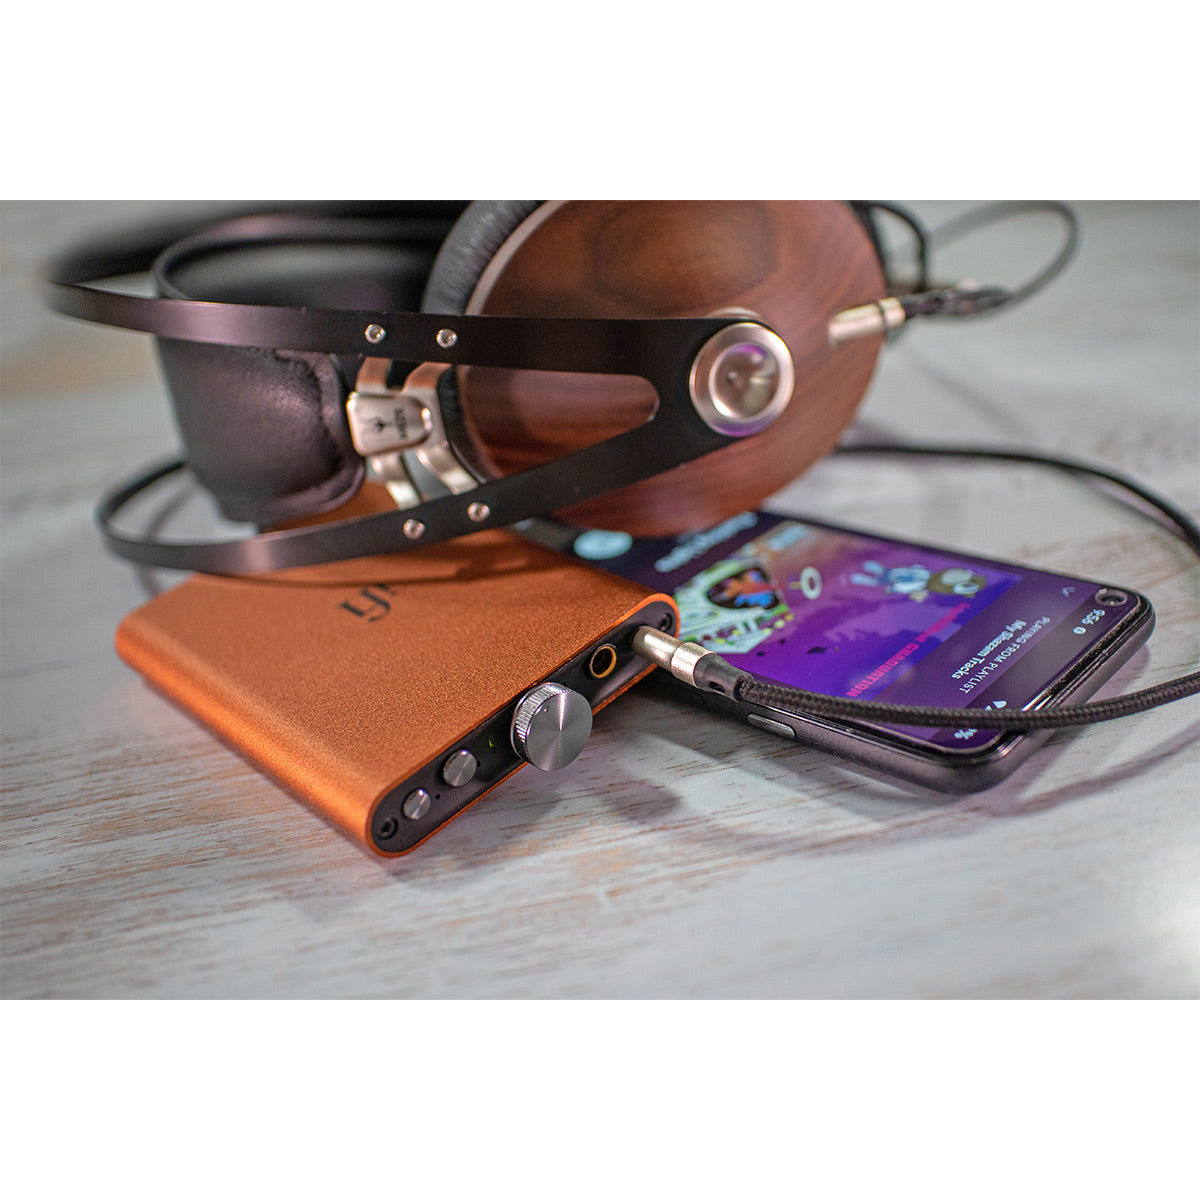 iFi Audio Hip-dac2 Portable USB DAC and Headphone Amp